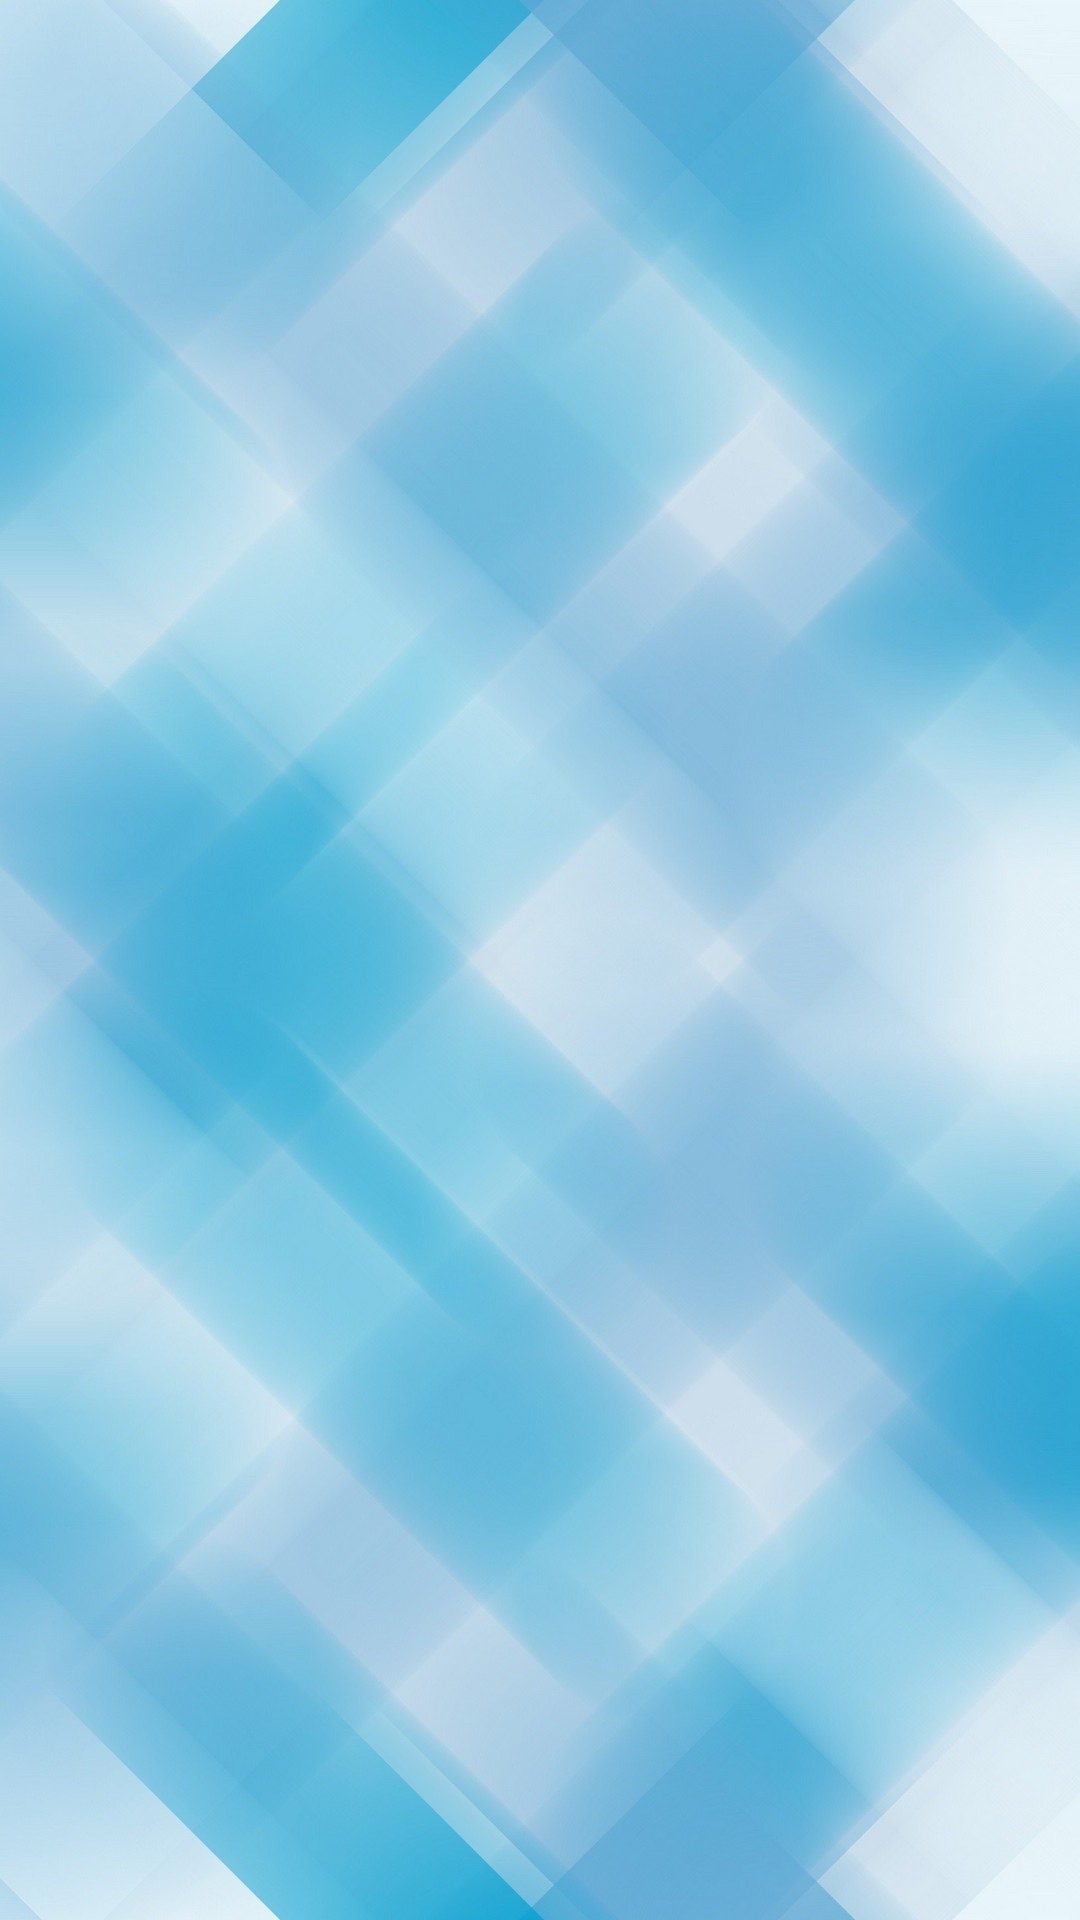 1080x1920 Blue iPhone Wallpaper Cute resolution 